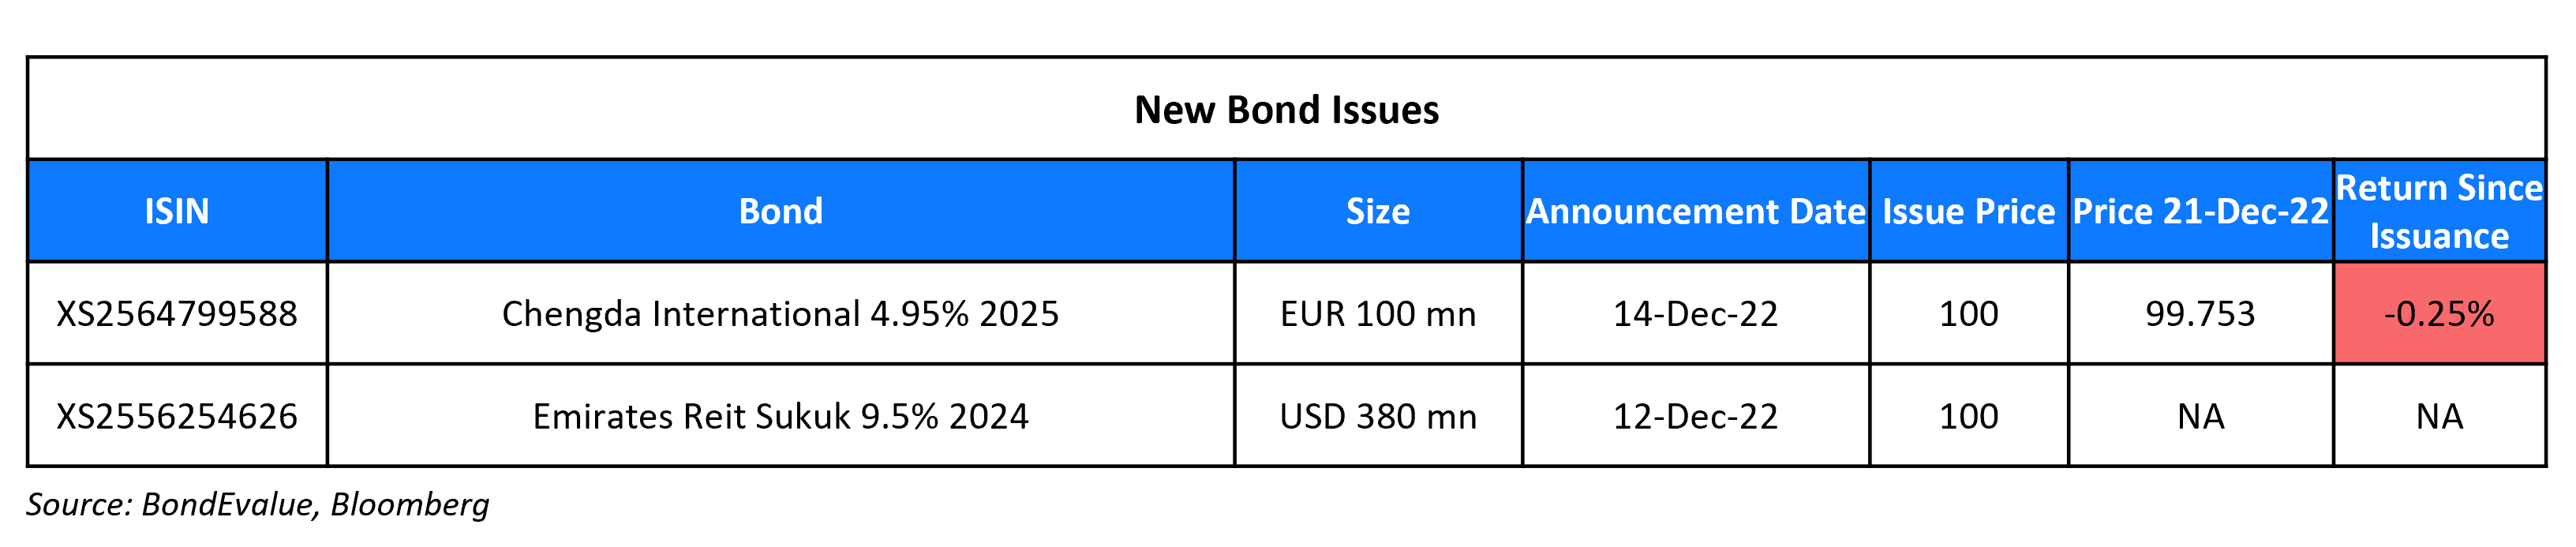 New Bond Issues 21 Dec 22